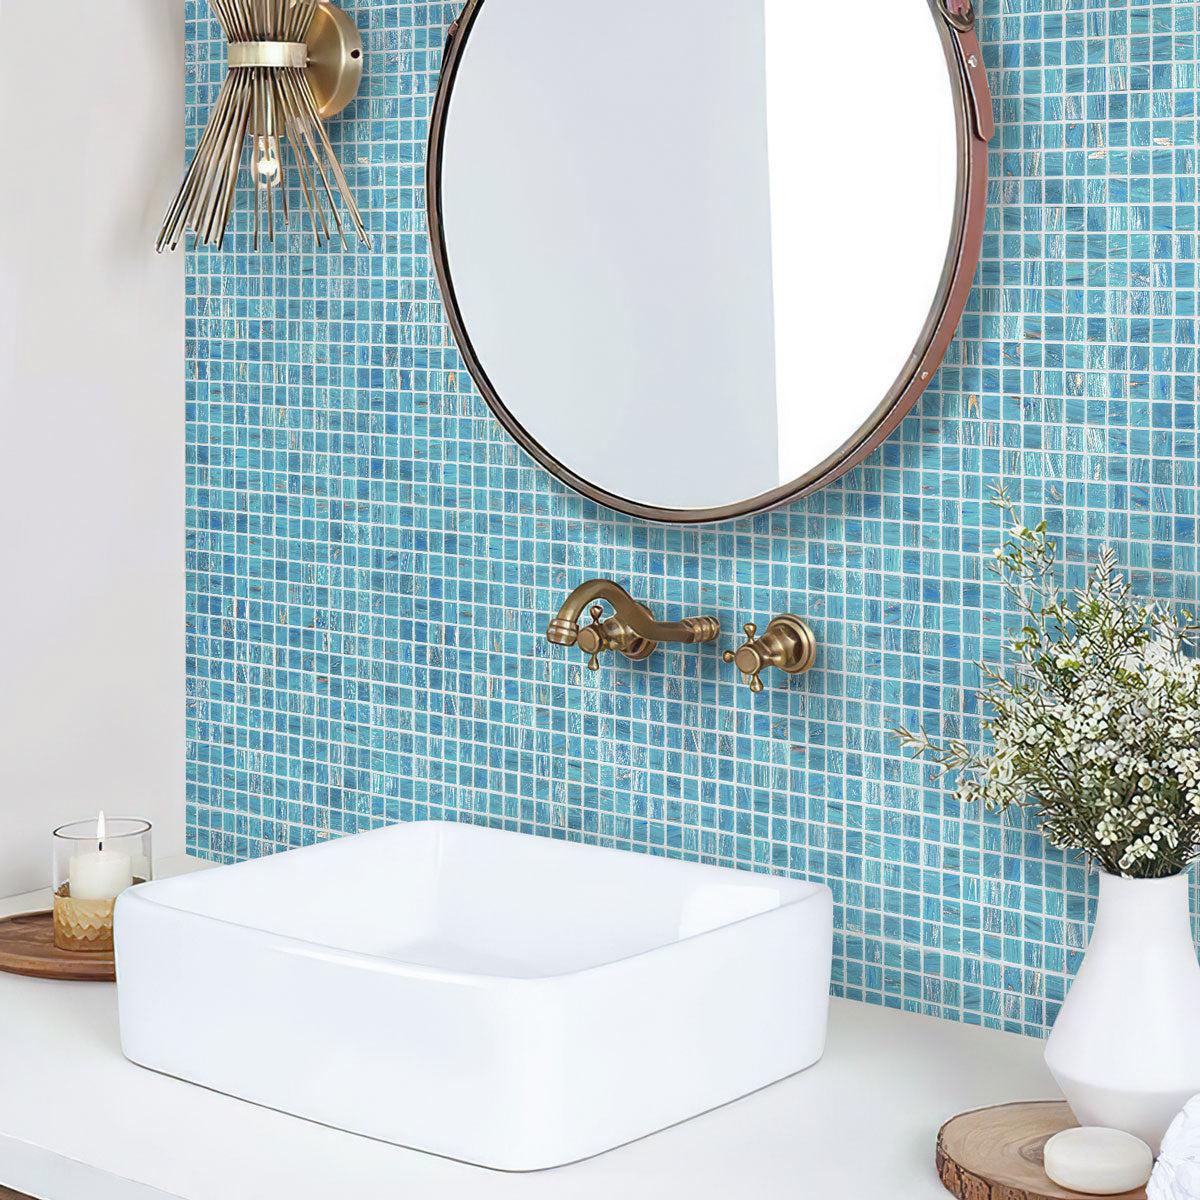 Sparkling Classic Blue and Gold Mixed Squares Glass Pool Tile Bathroom Backsplash